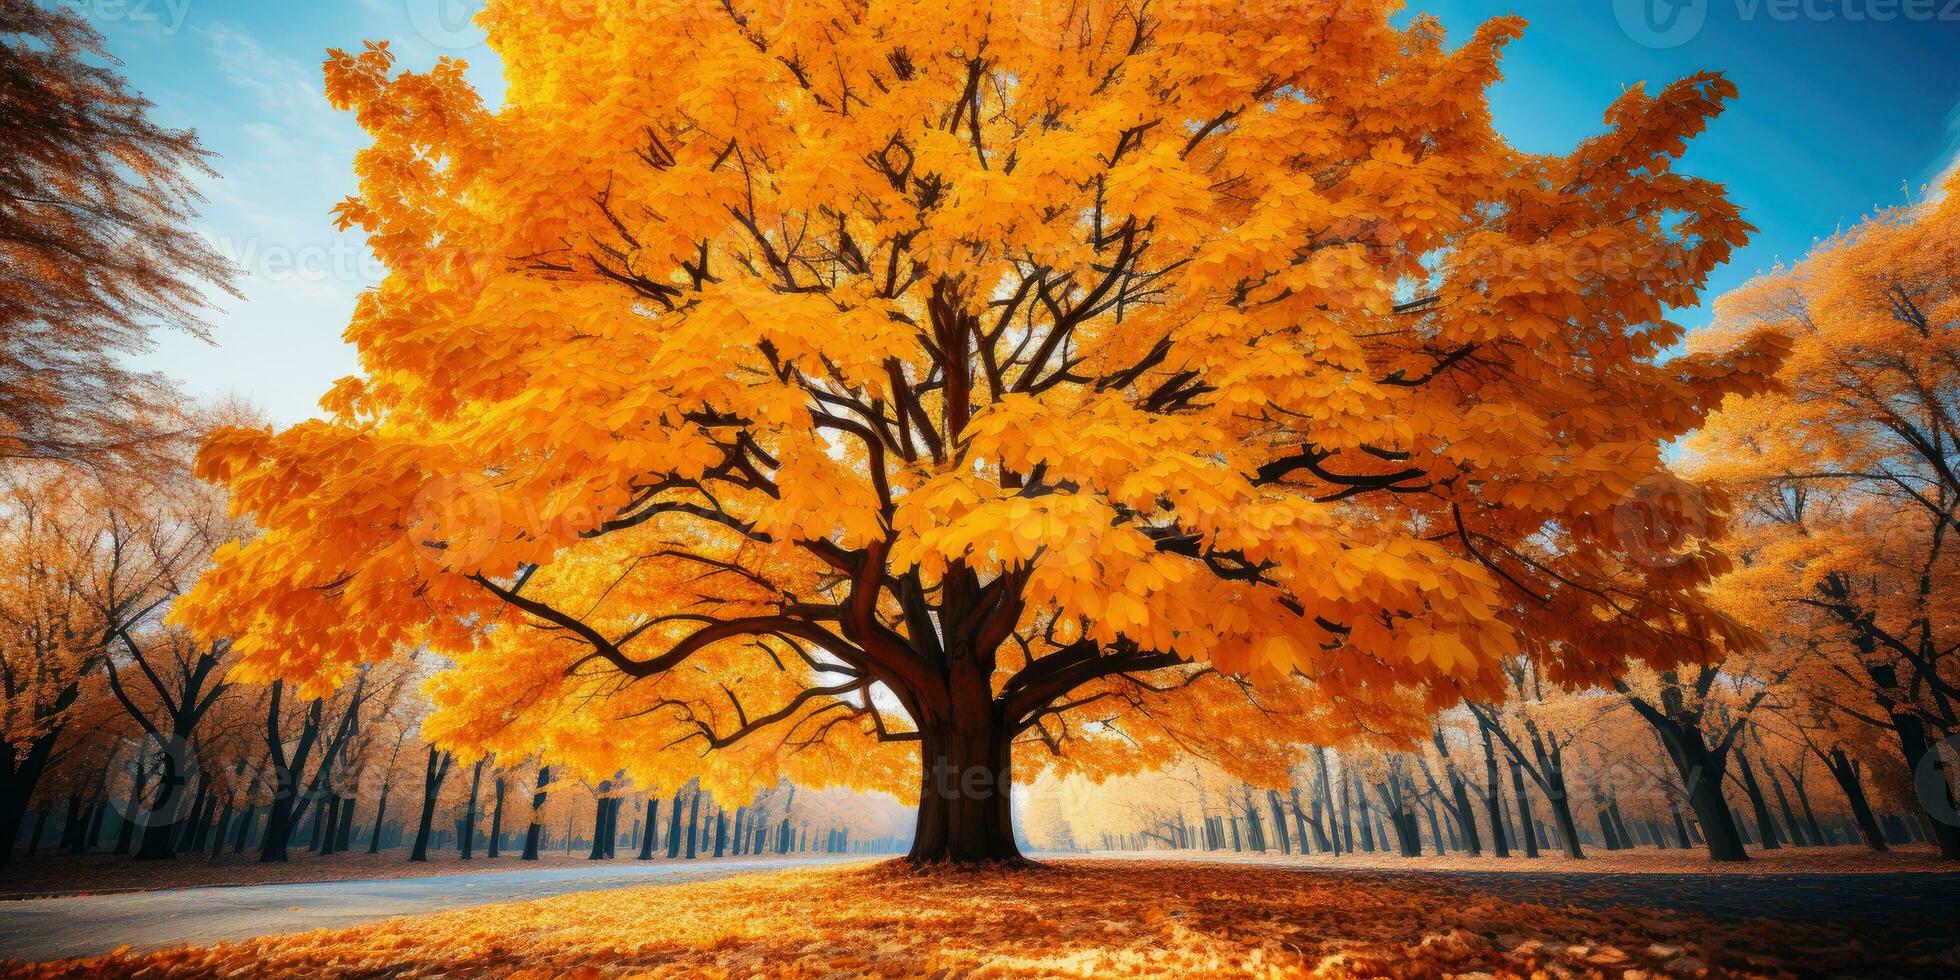 autumn orange tree falling peaceful landscape freedom scene beautiful nature wallpaper photo